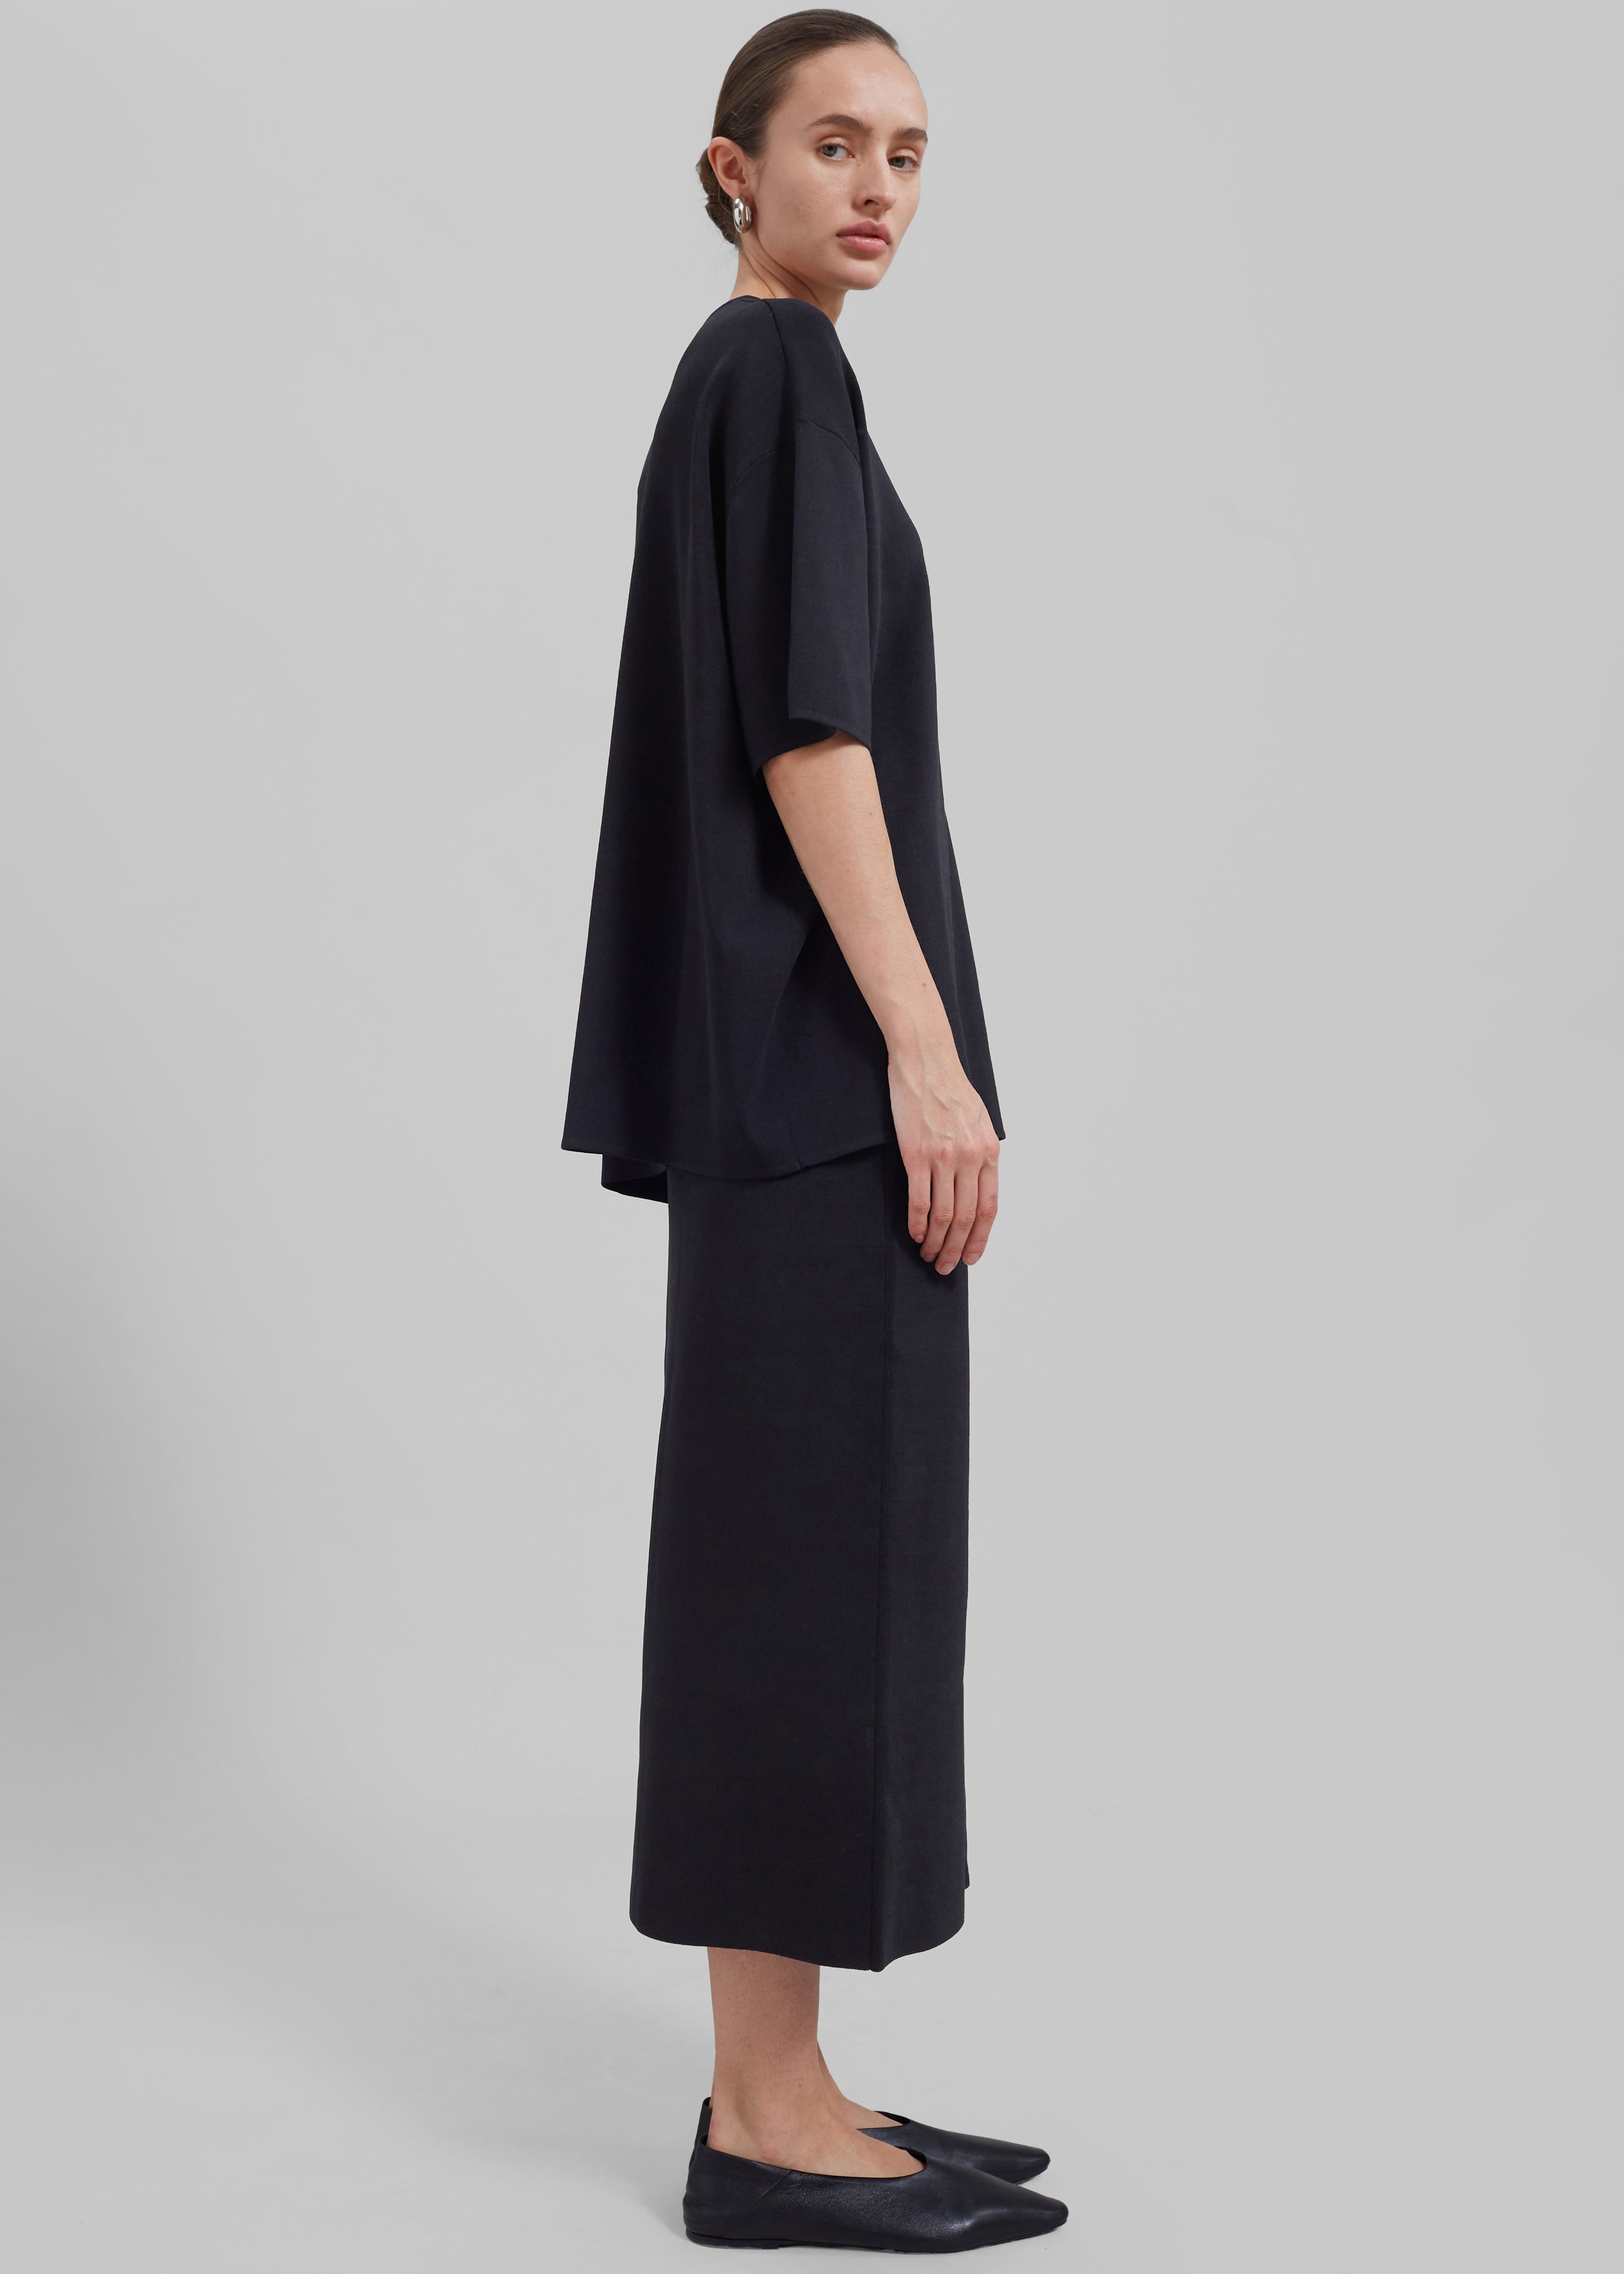 Solange Knit Pencil Skirt - Black - 10